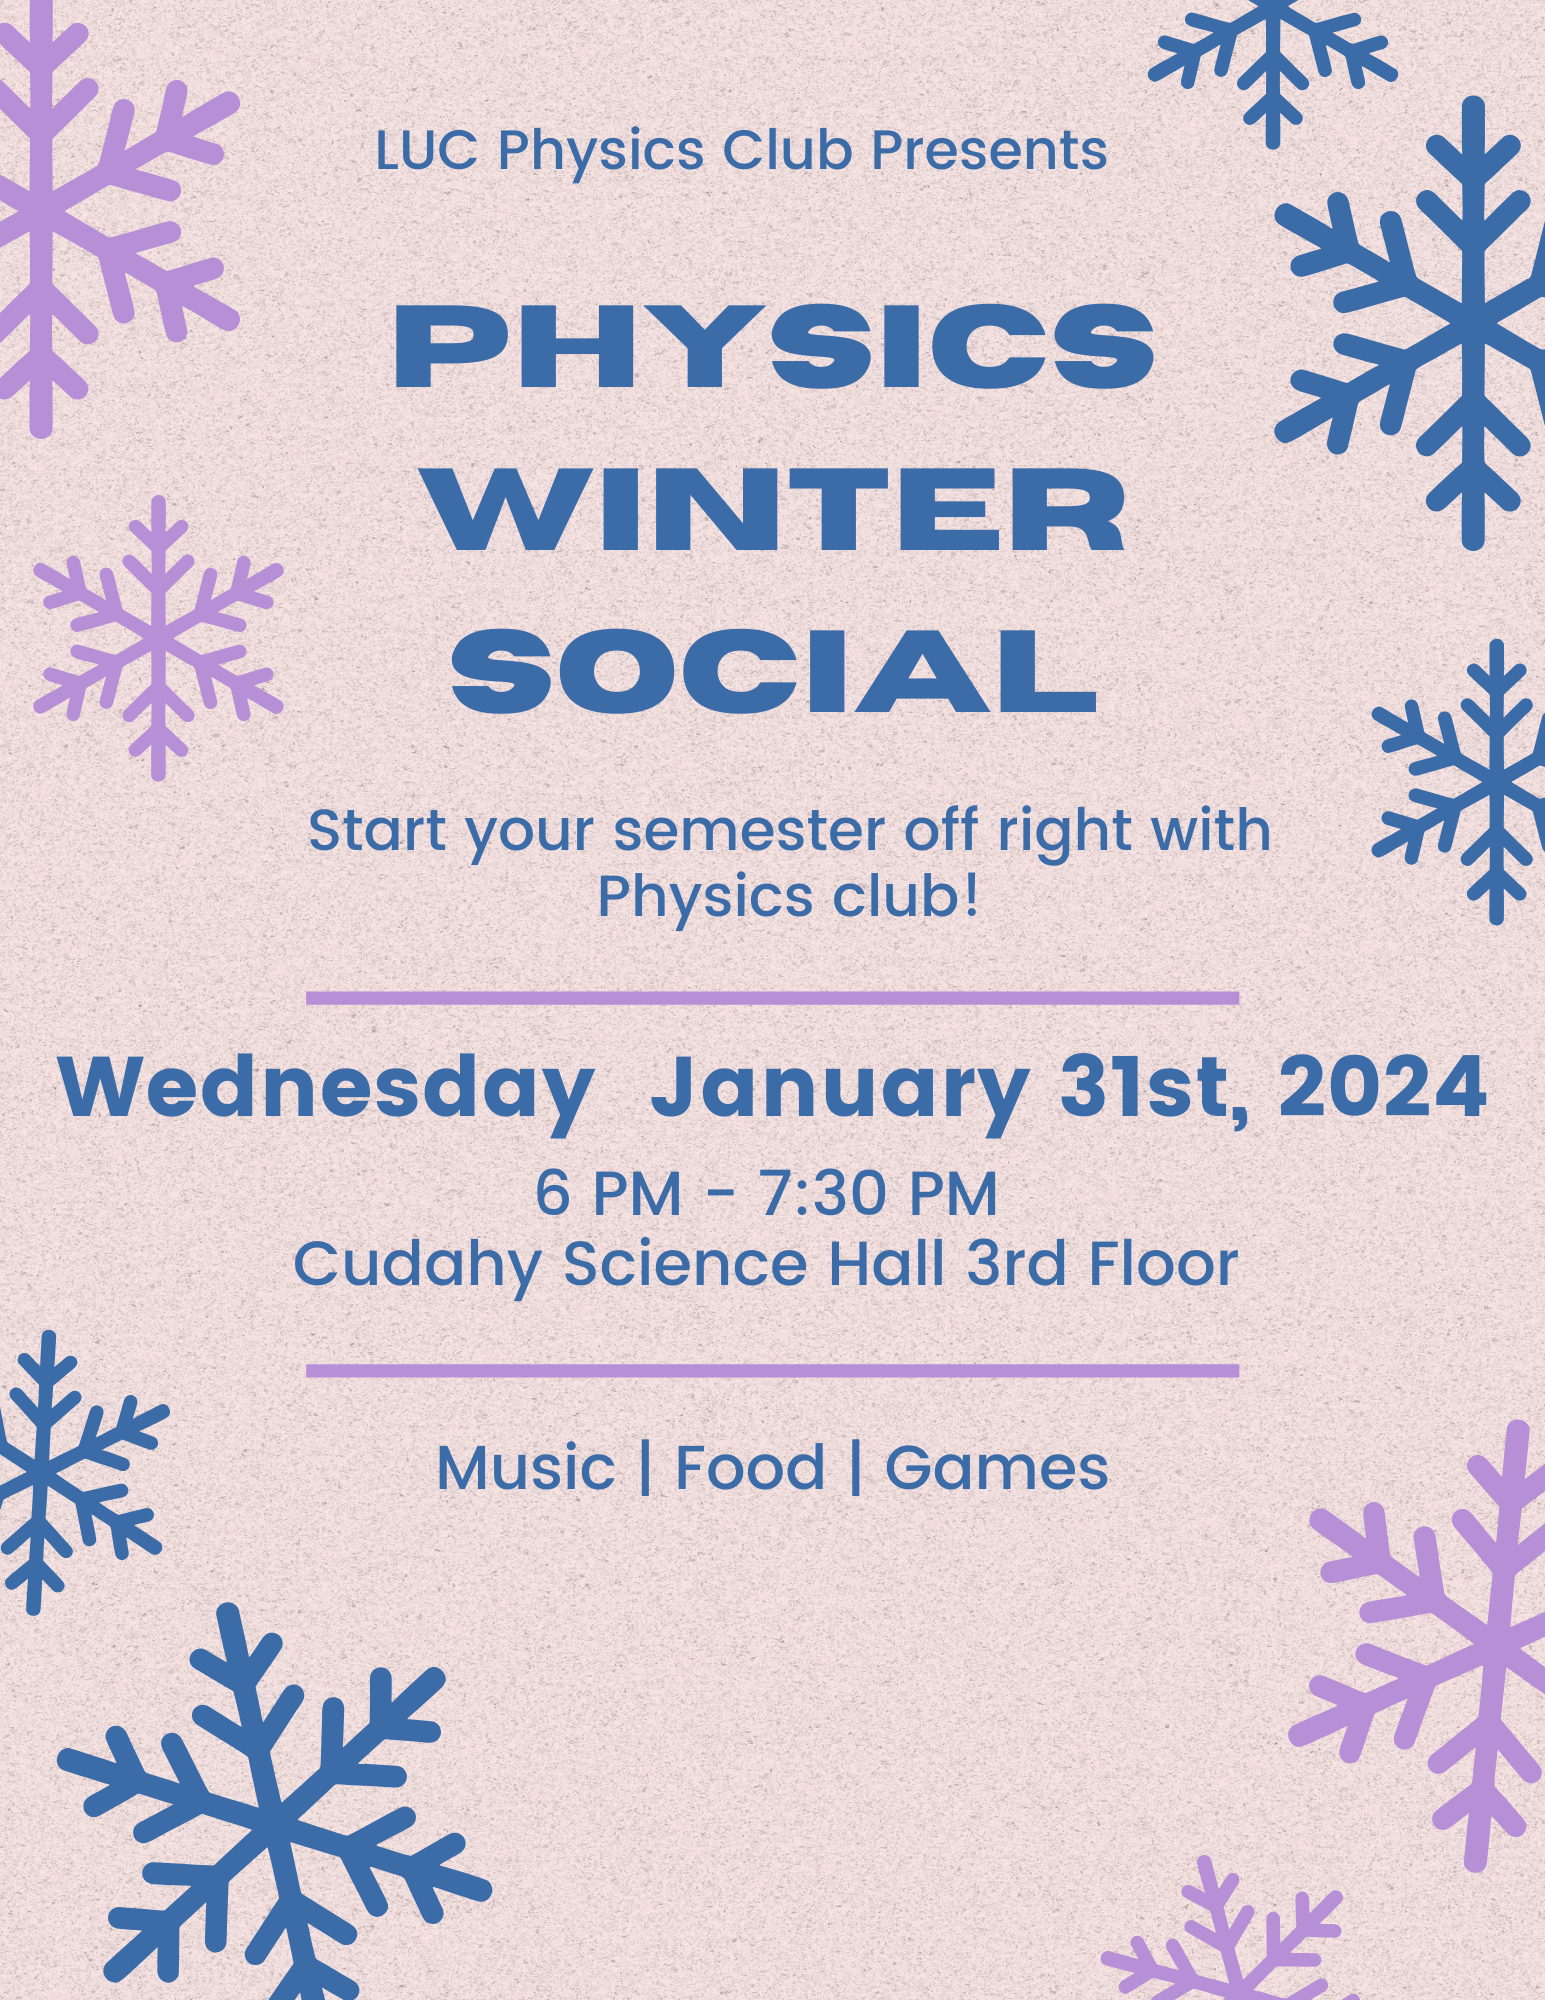 
Physics Winter Social